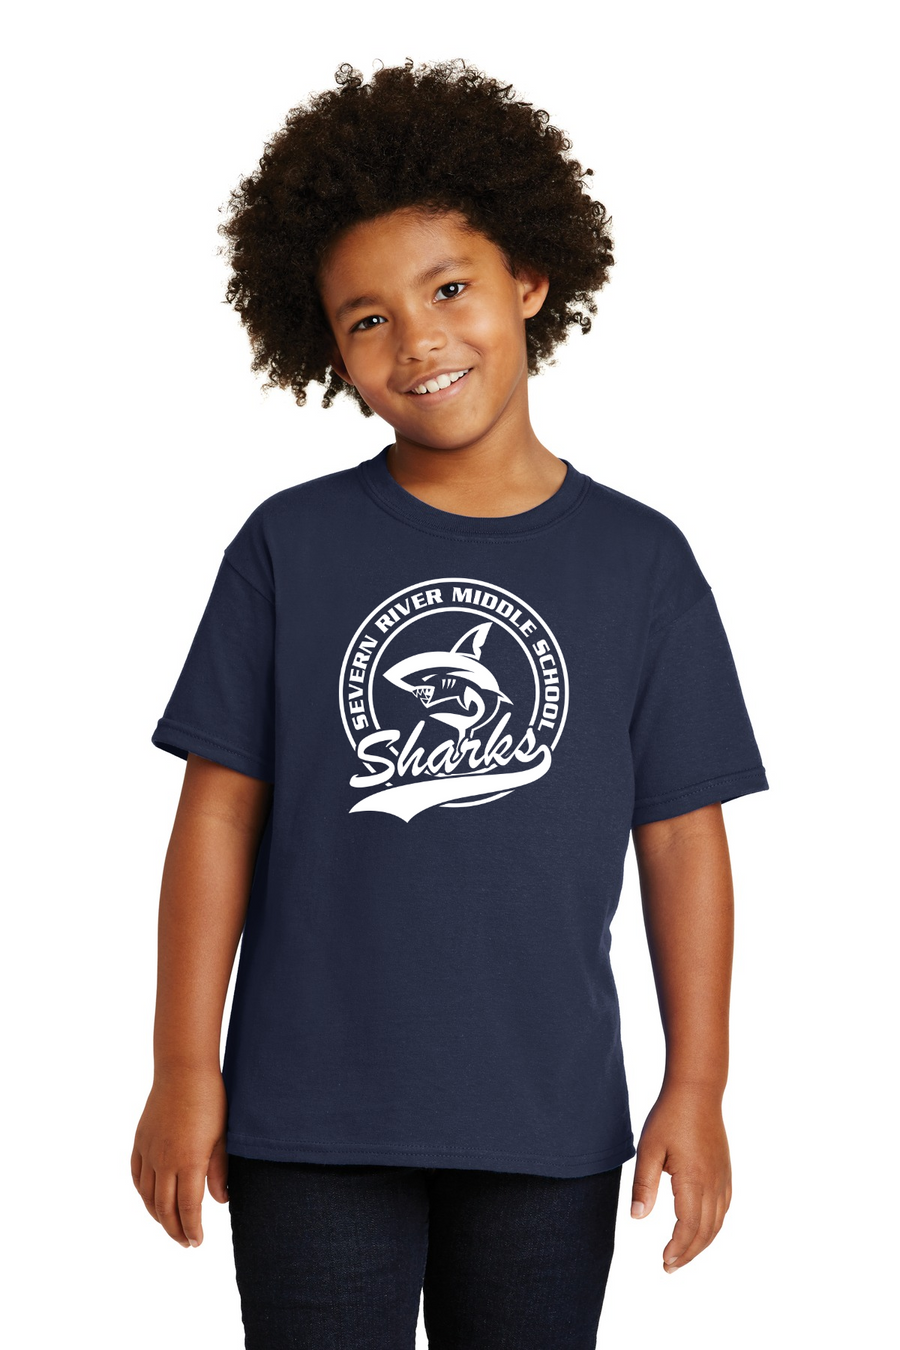 Severn River Middle Spirit Wear 2023-24 On-Demand-Unisex T-Shirt